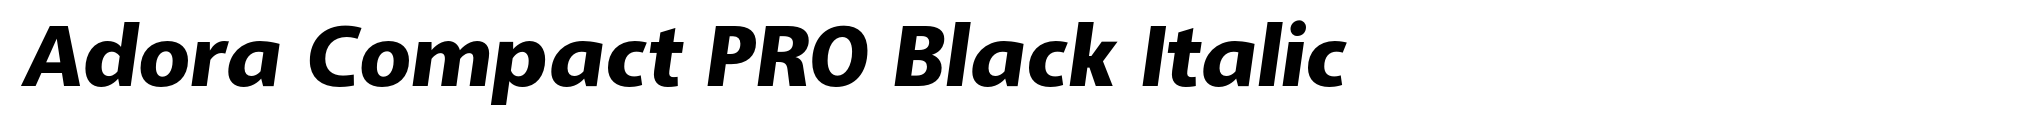 Adora Compact PRO Black Italic image